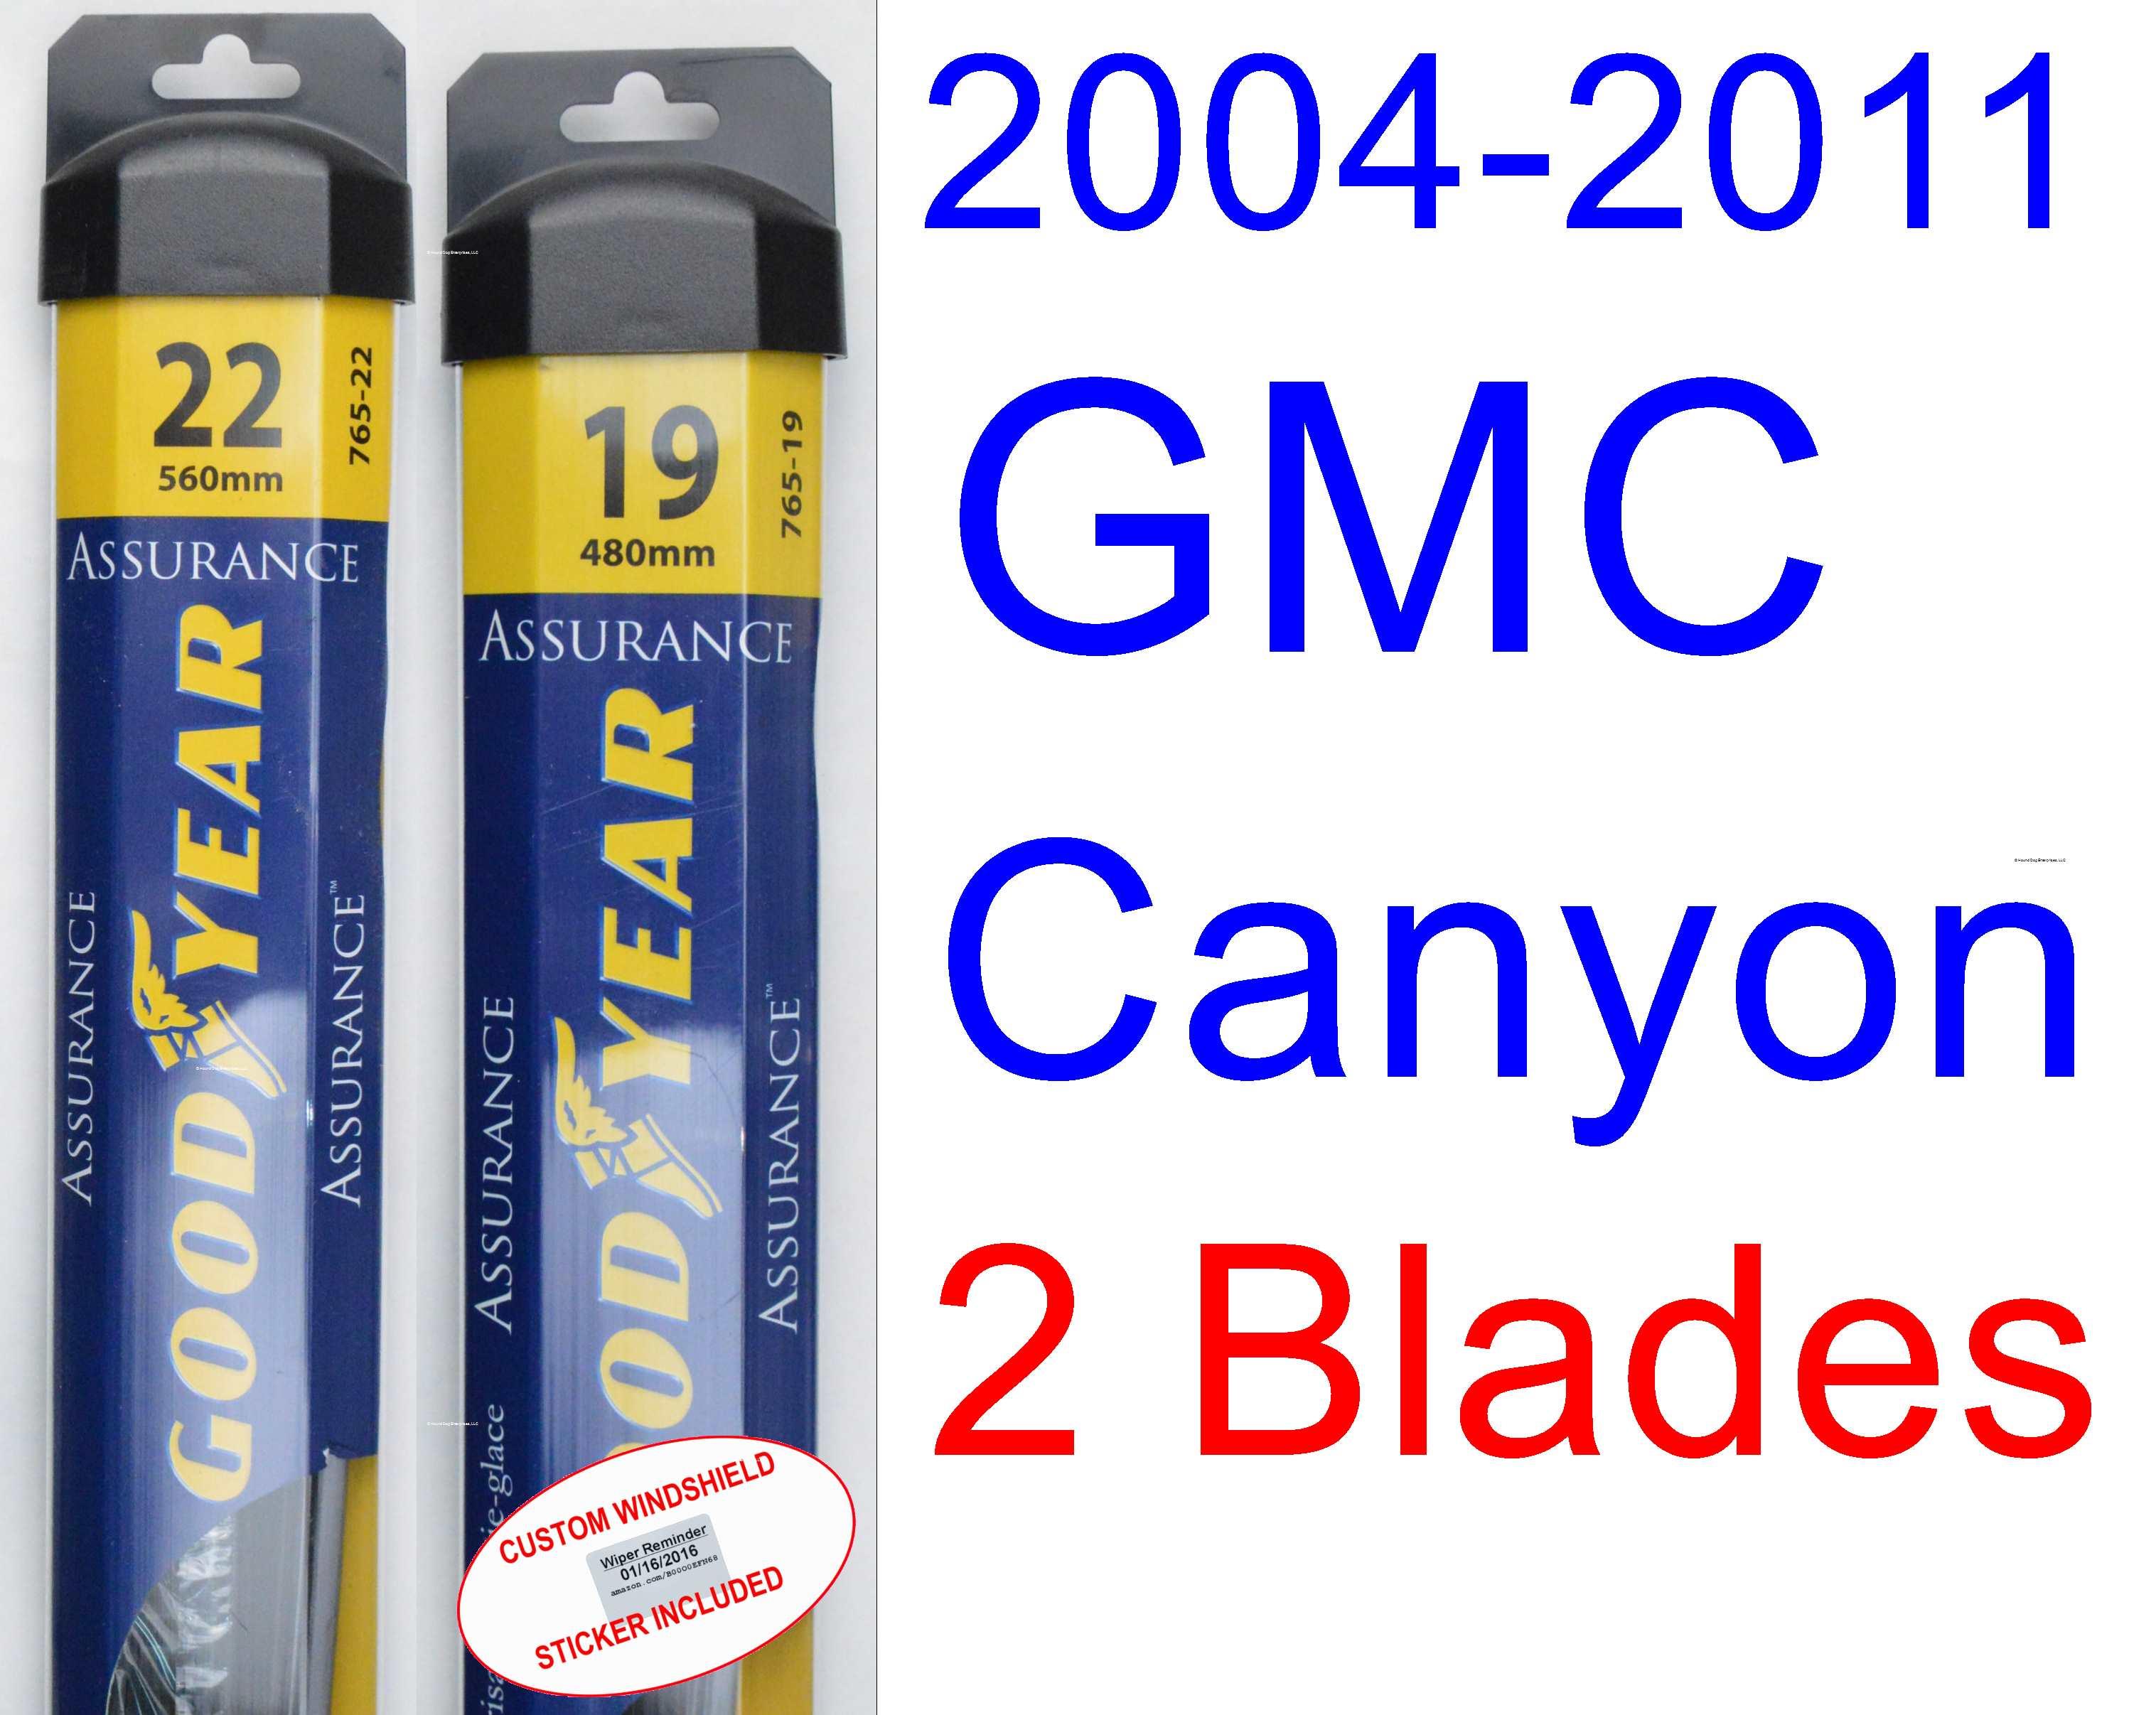 2004 2011 GMC Canyon Replacement Wiper Blade Set/Kit (Set of 2 Blades) (Goodyear Wiper Blades Assurance) (2005,2006,2007,2008,2009,2010)